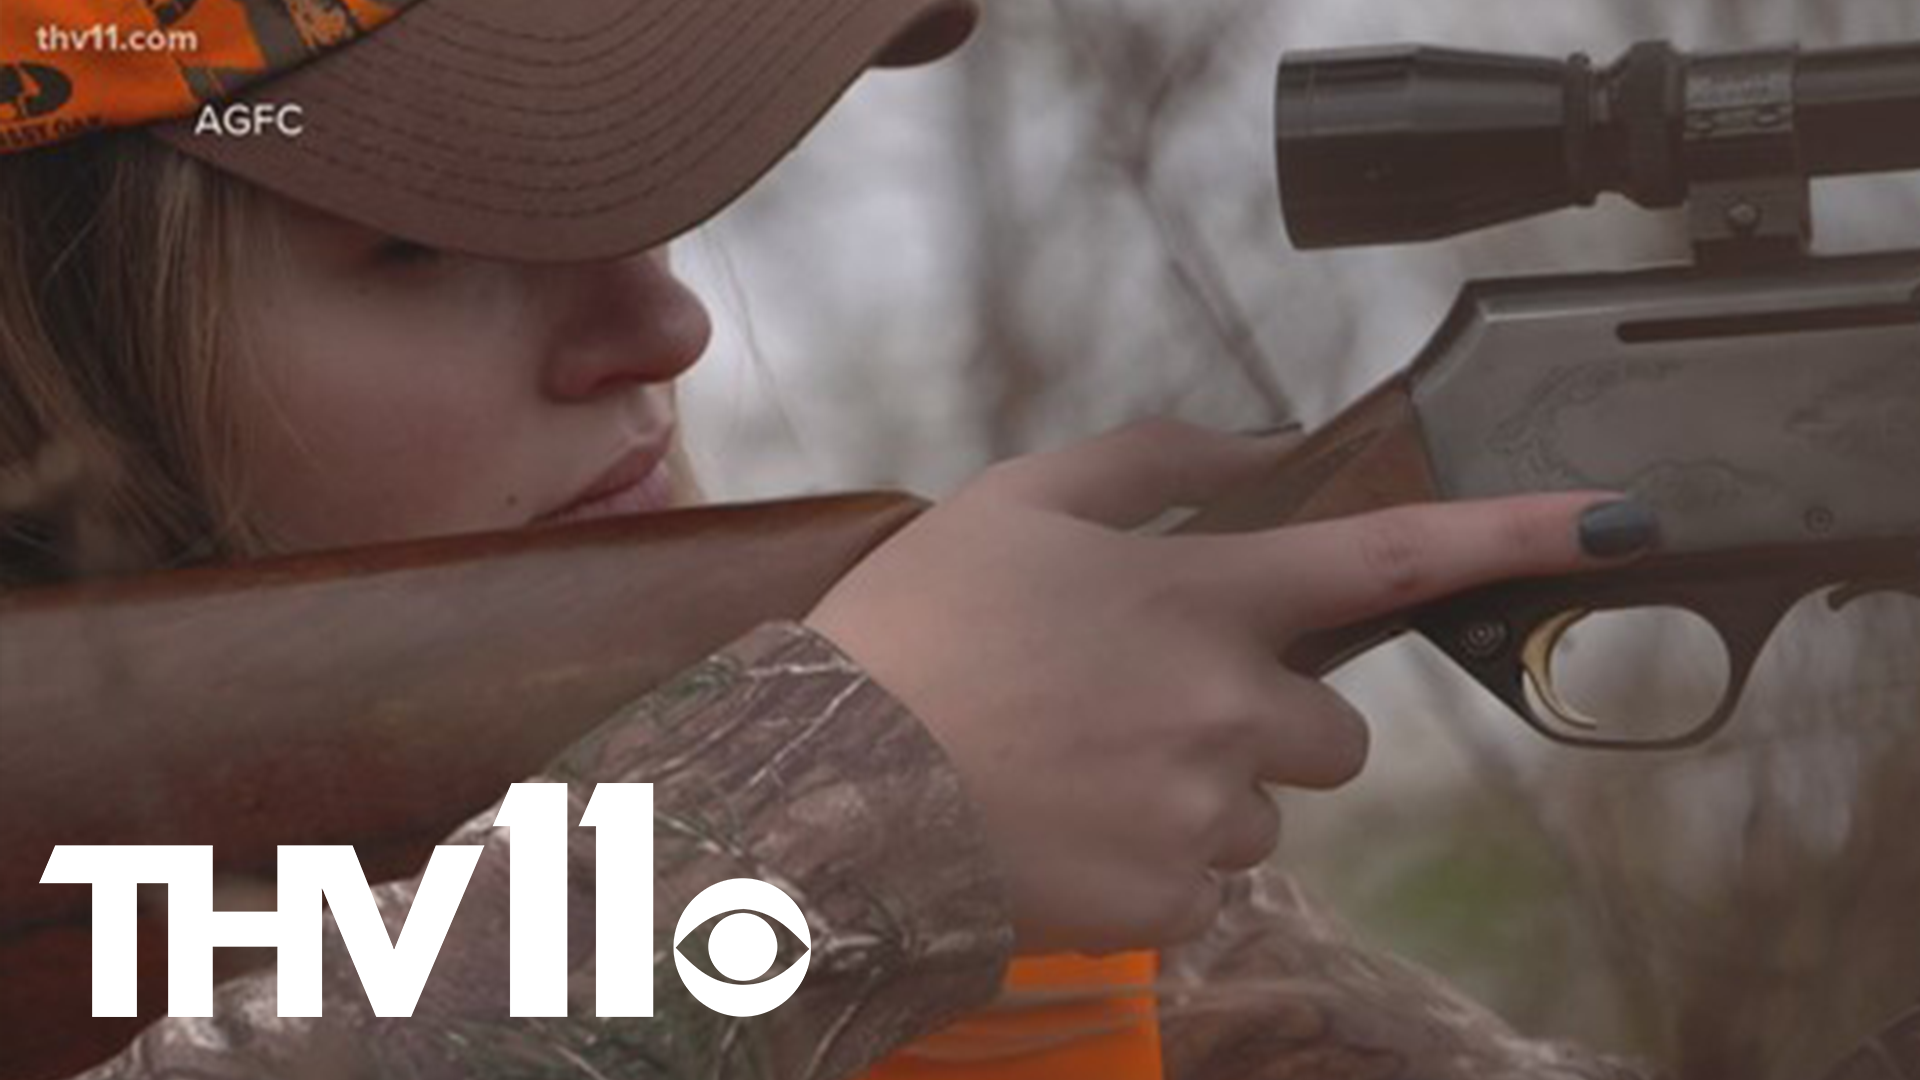 Arkansas modern gun deer season starts Saturday